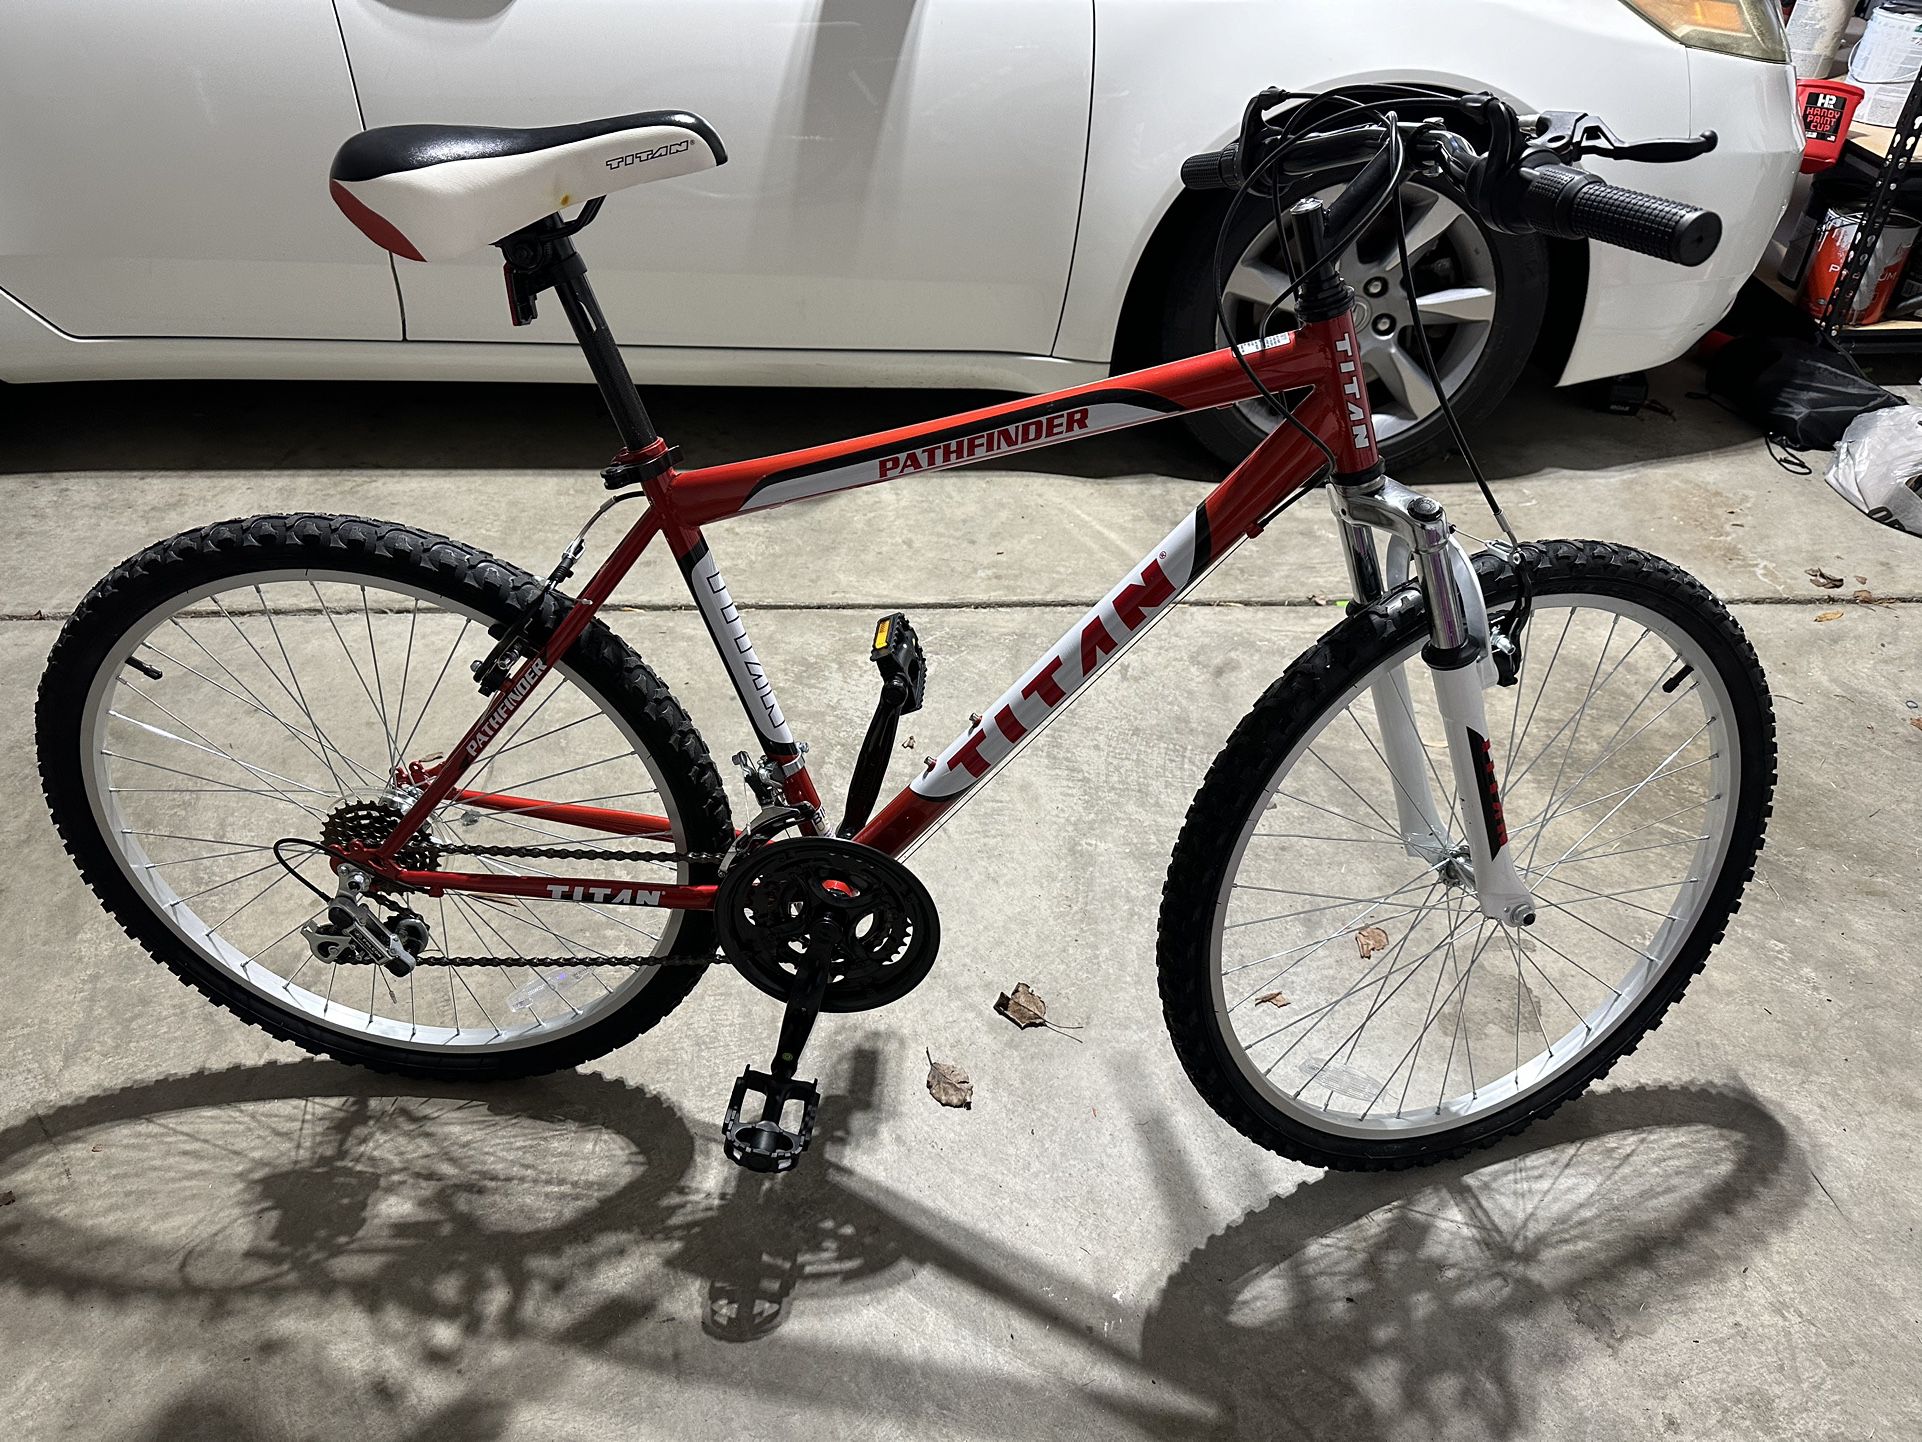 ATB “18 Inch” Mountain Bike 